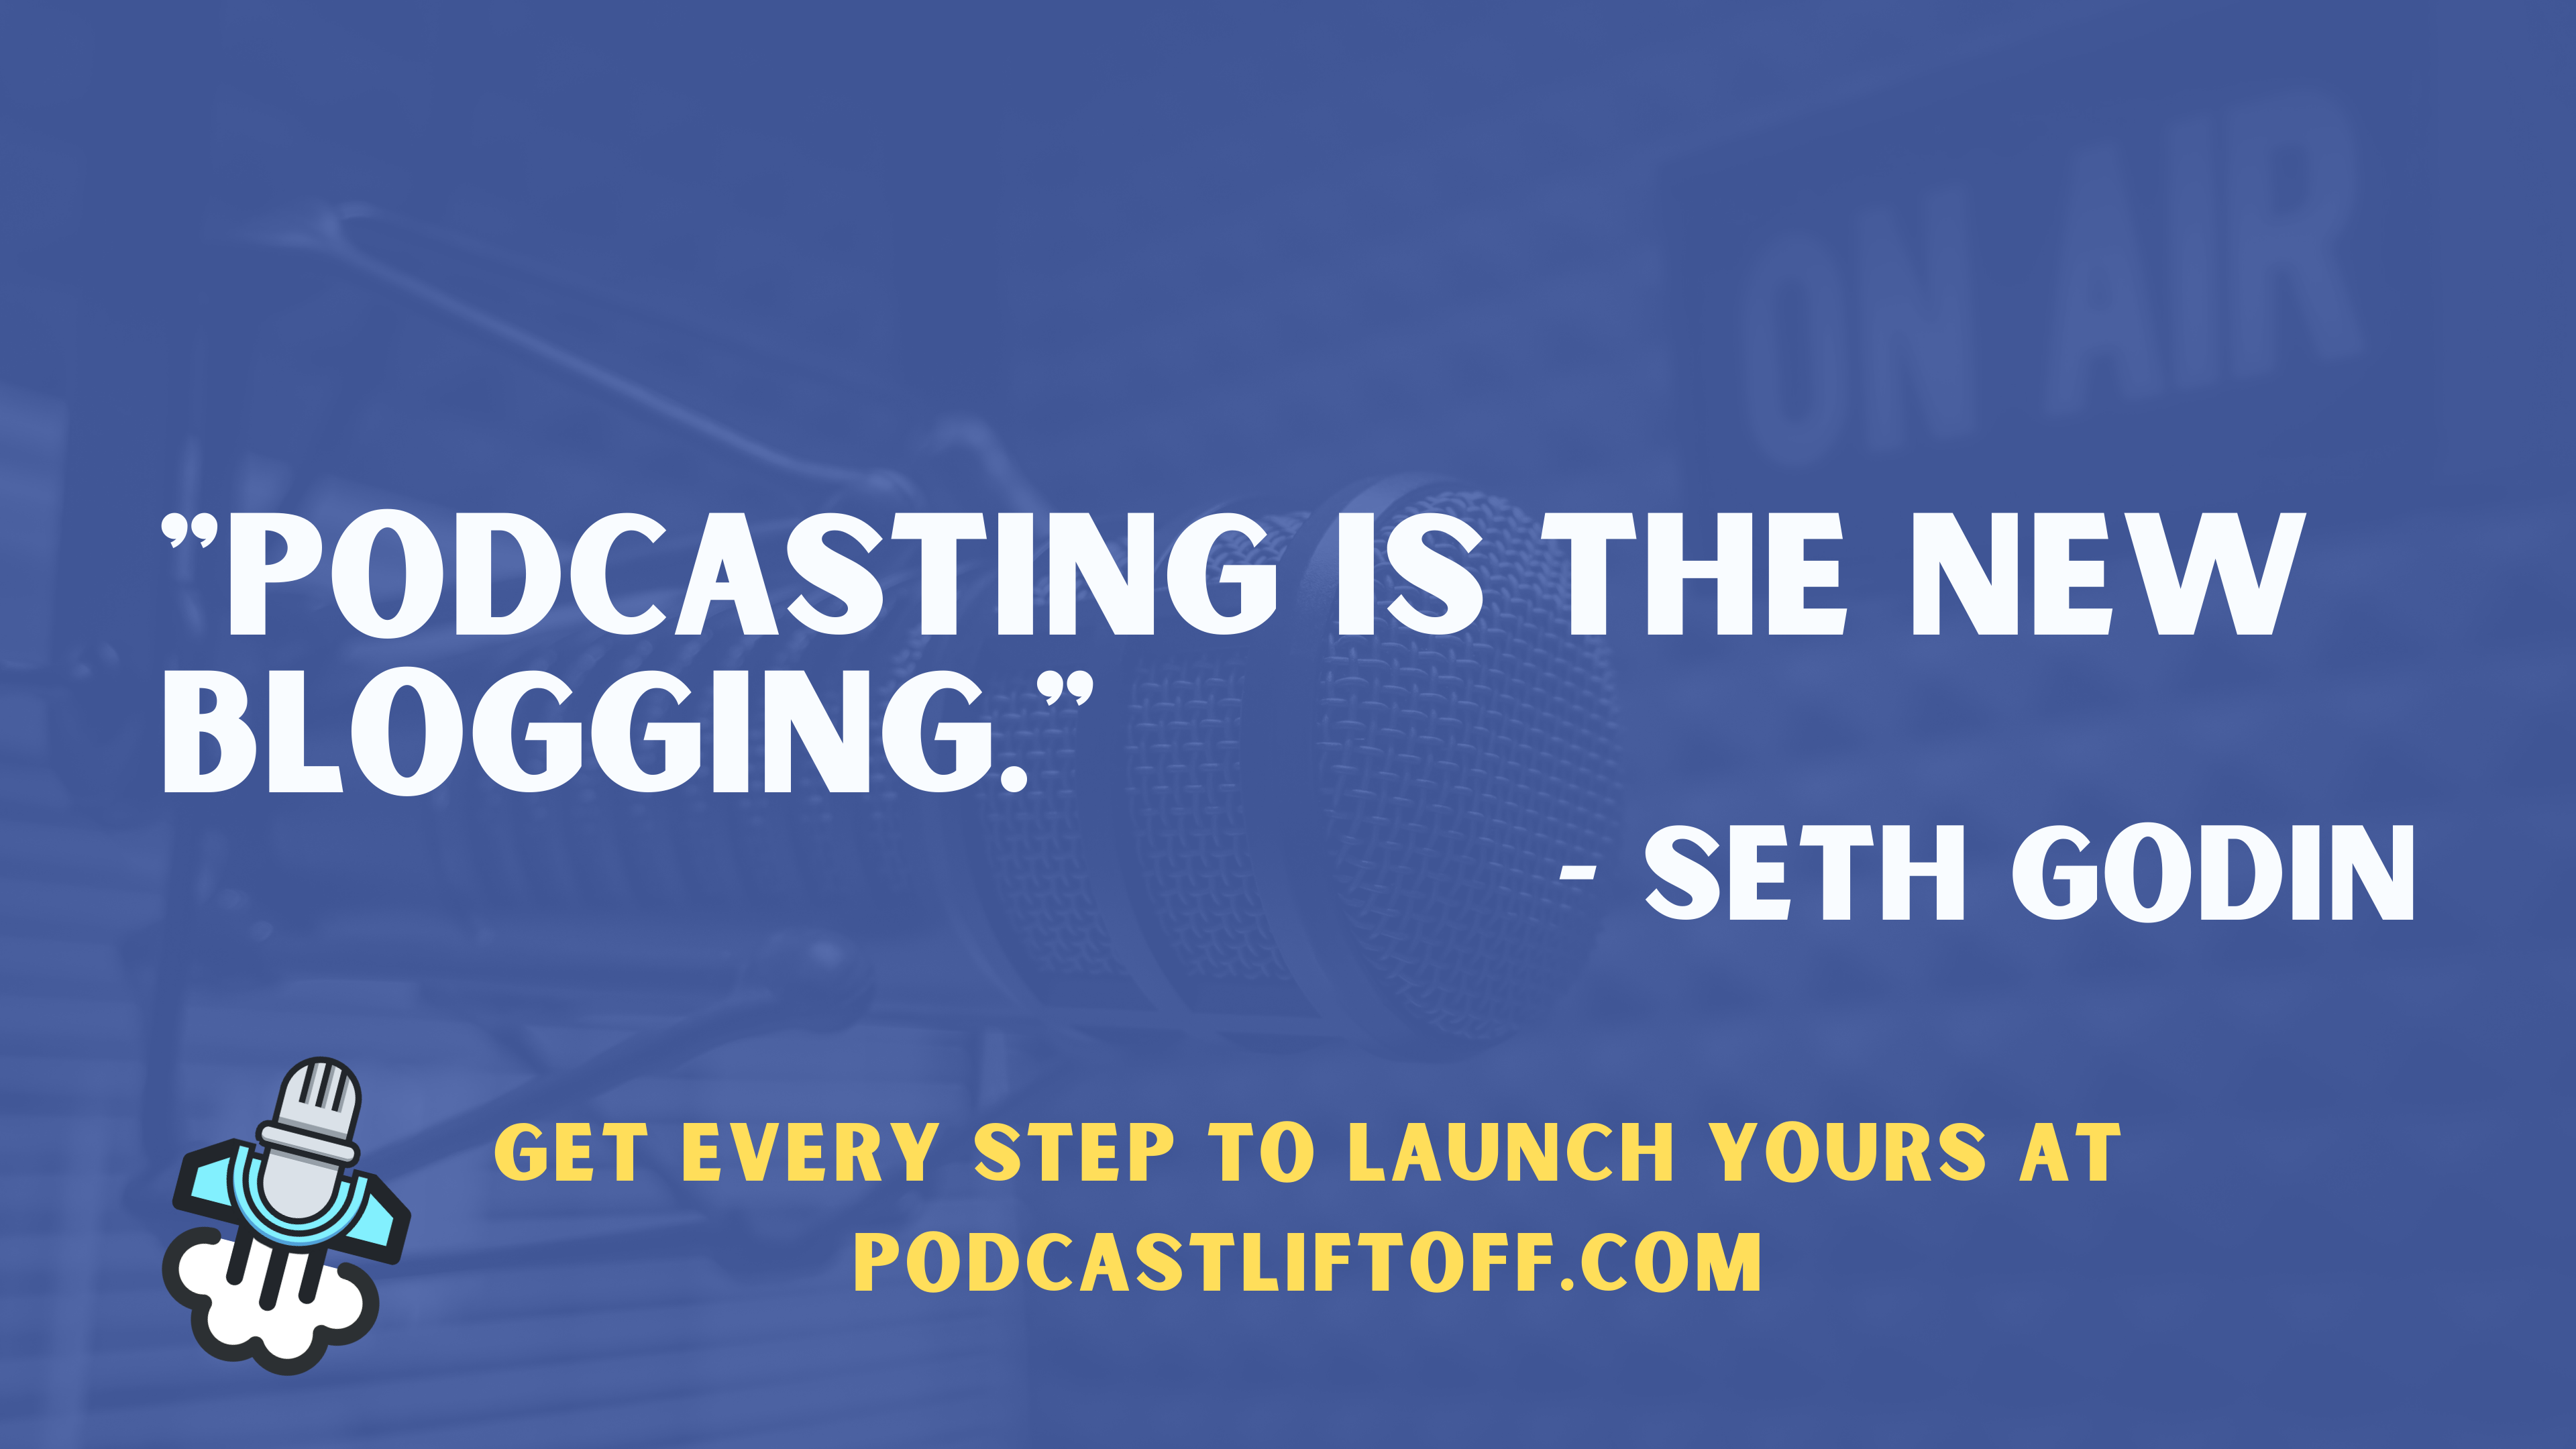 "Podcasting is the new Blogging." - Seth Godin